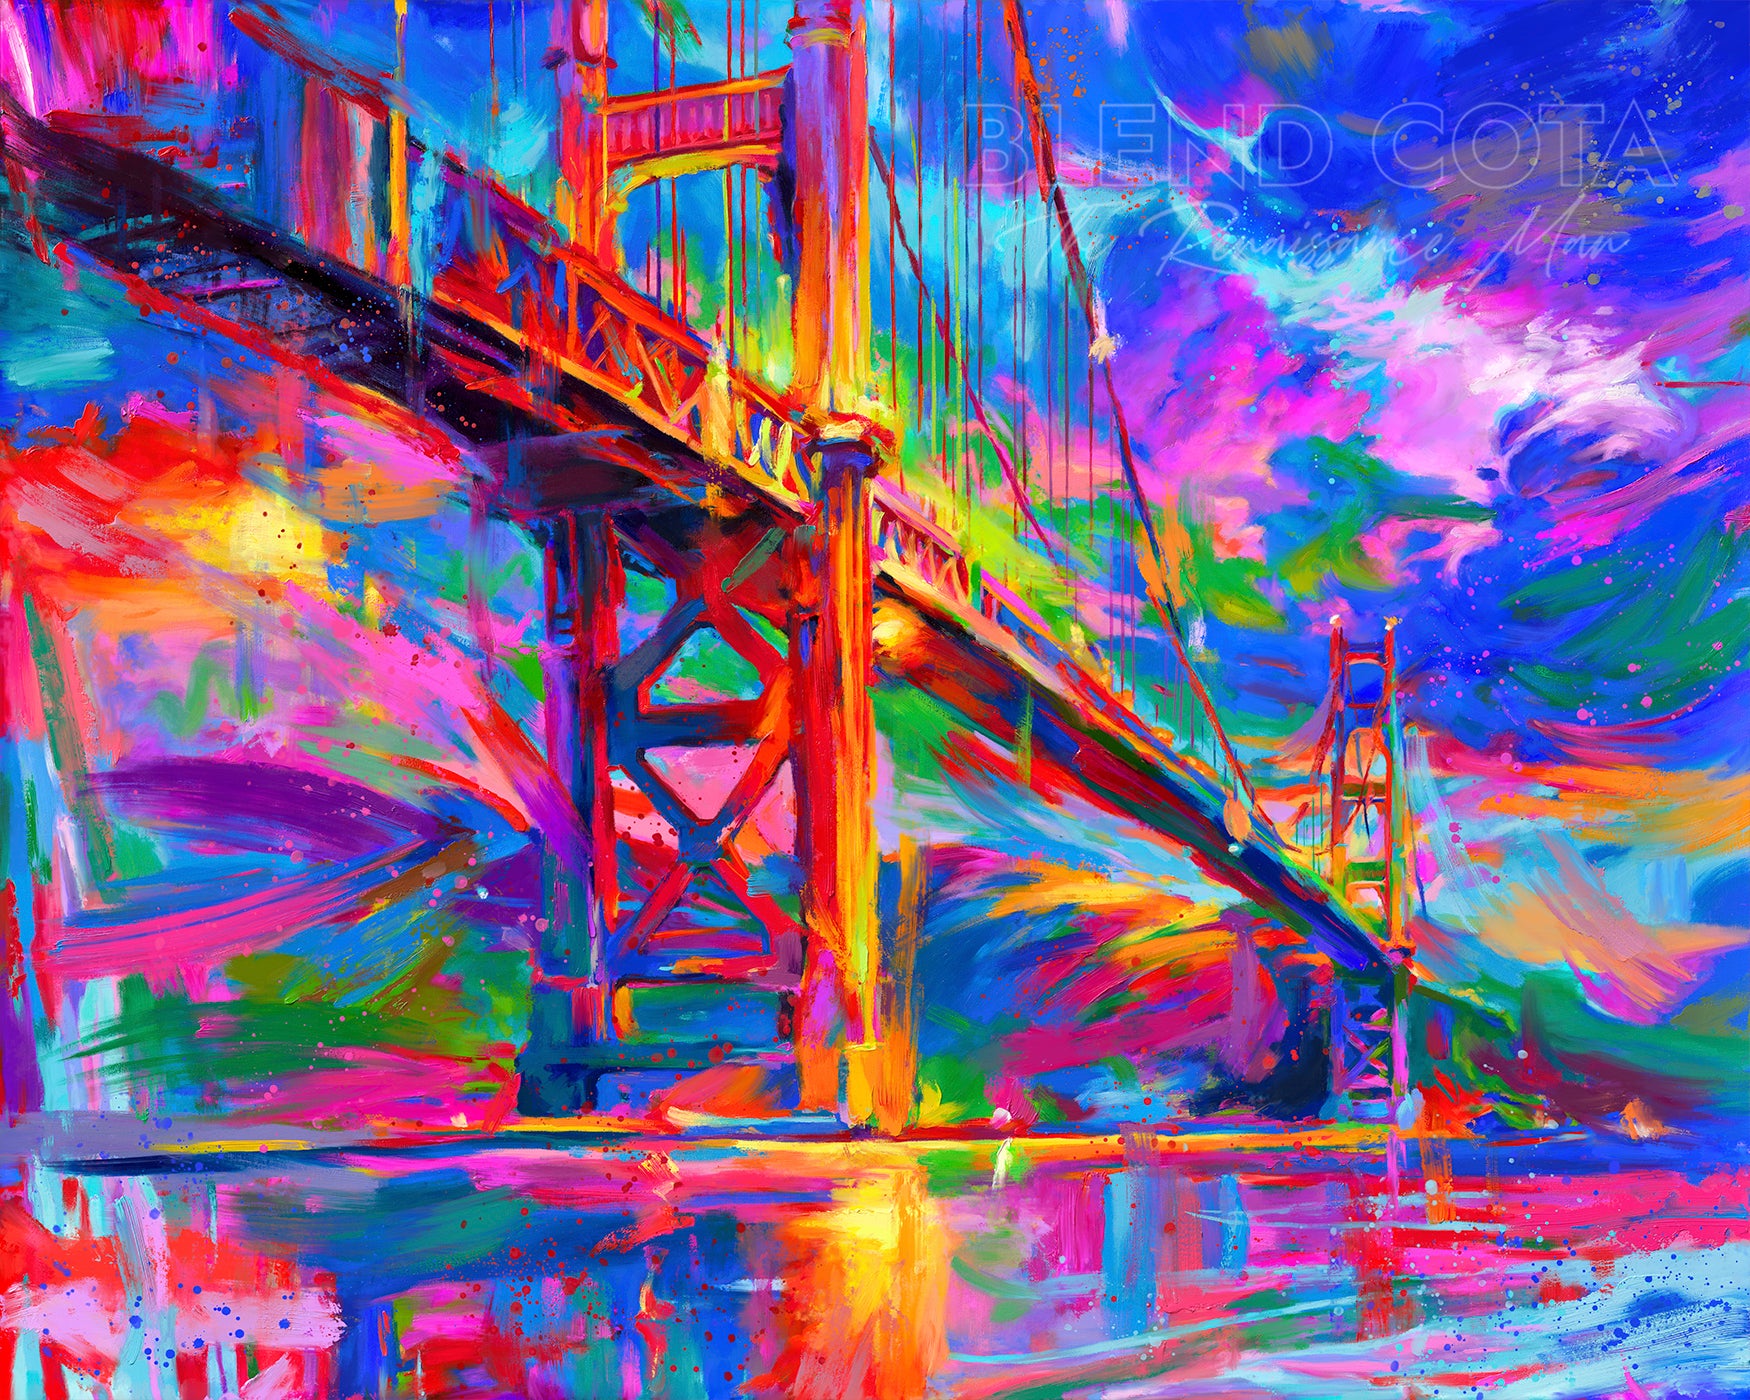 Golden Gate bridge - san francisco - Blend Cota original oil painting - blended expressionism - blend cota studios art